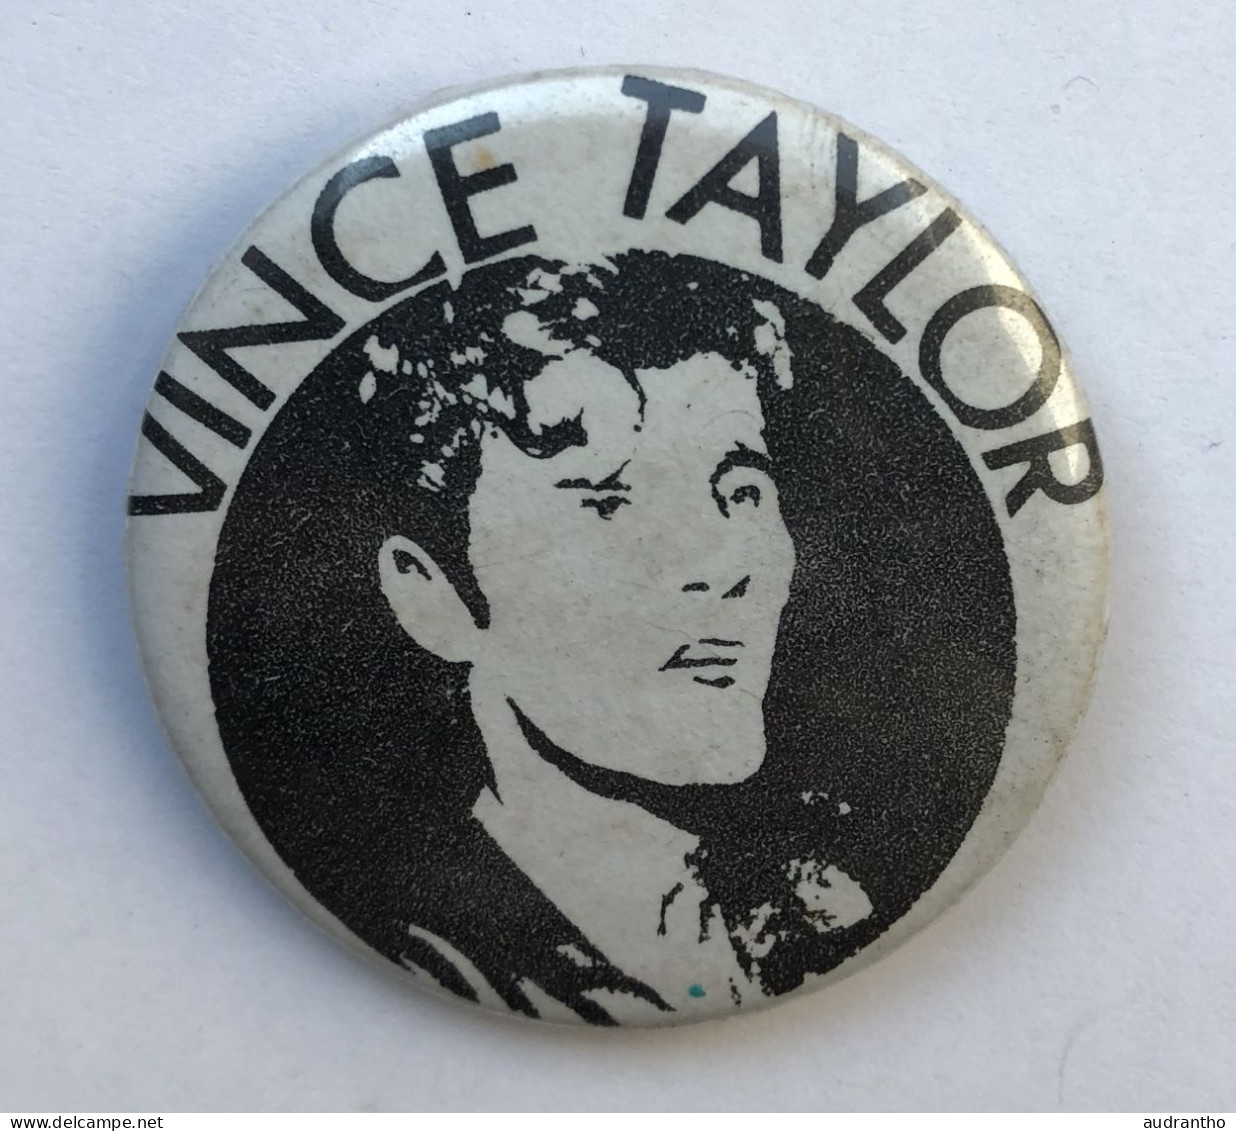 Badge Vintage - Chanteur Vince Taylor - Other Products